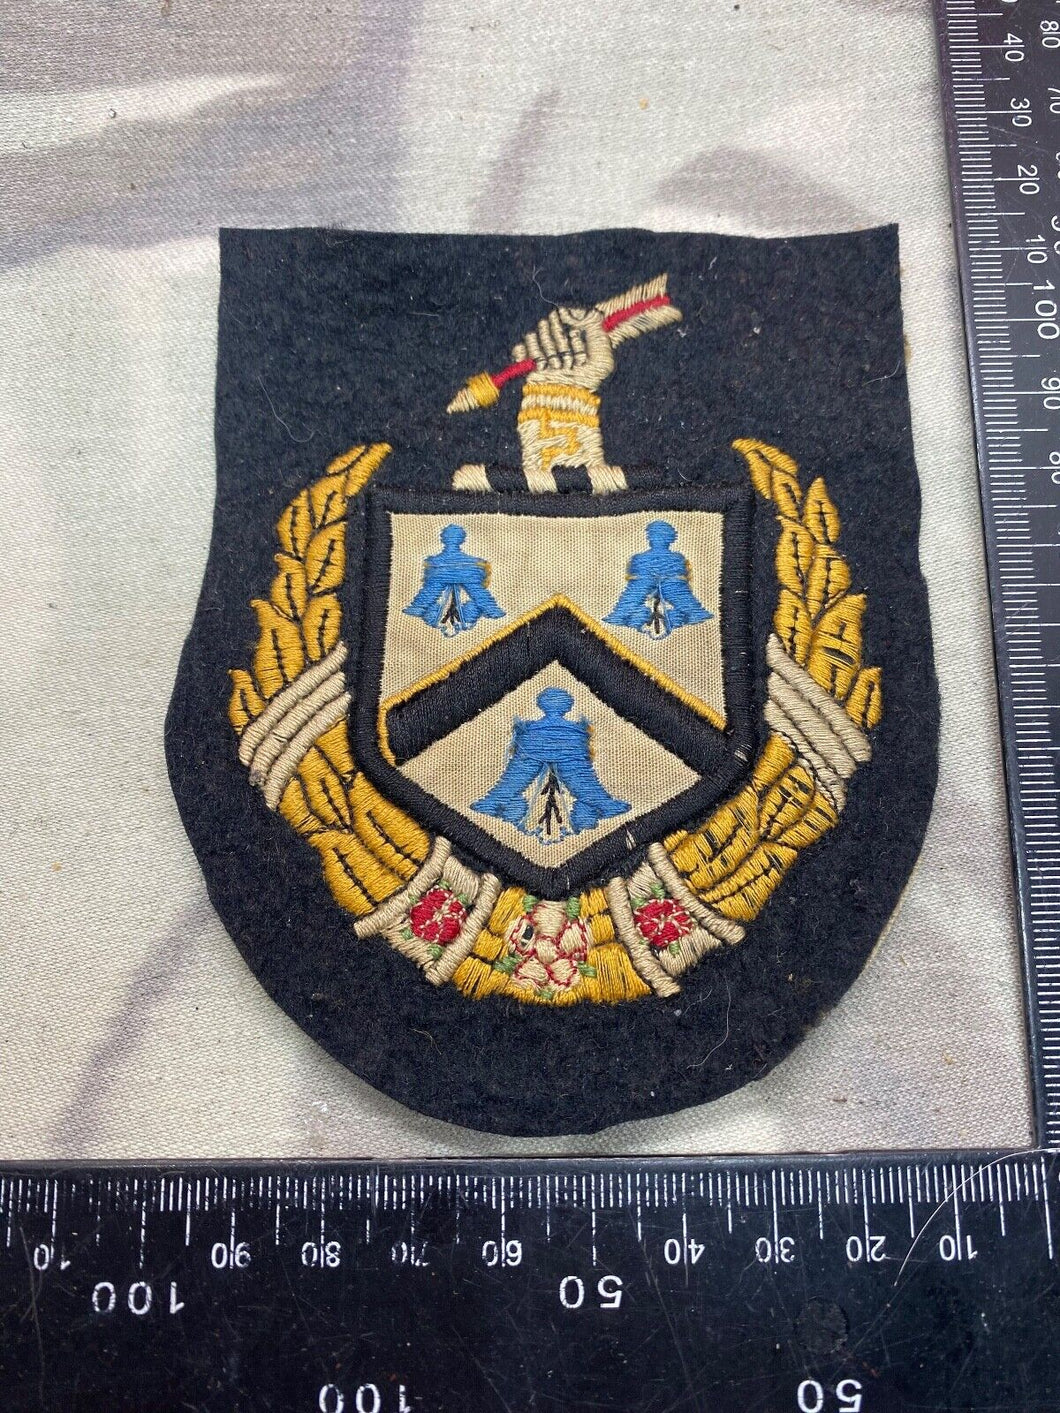 Original British Old Tauntonians' Association Blazer Badge